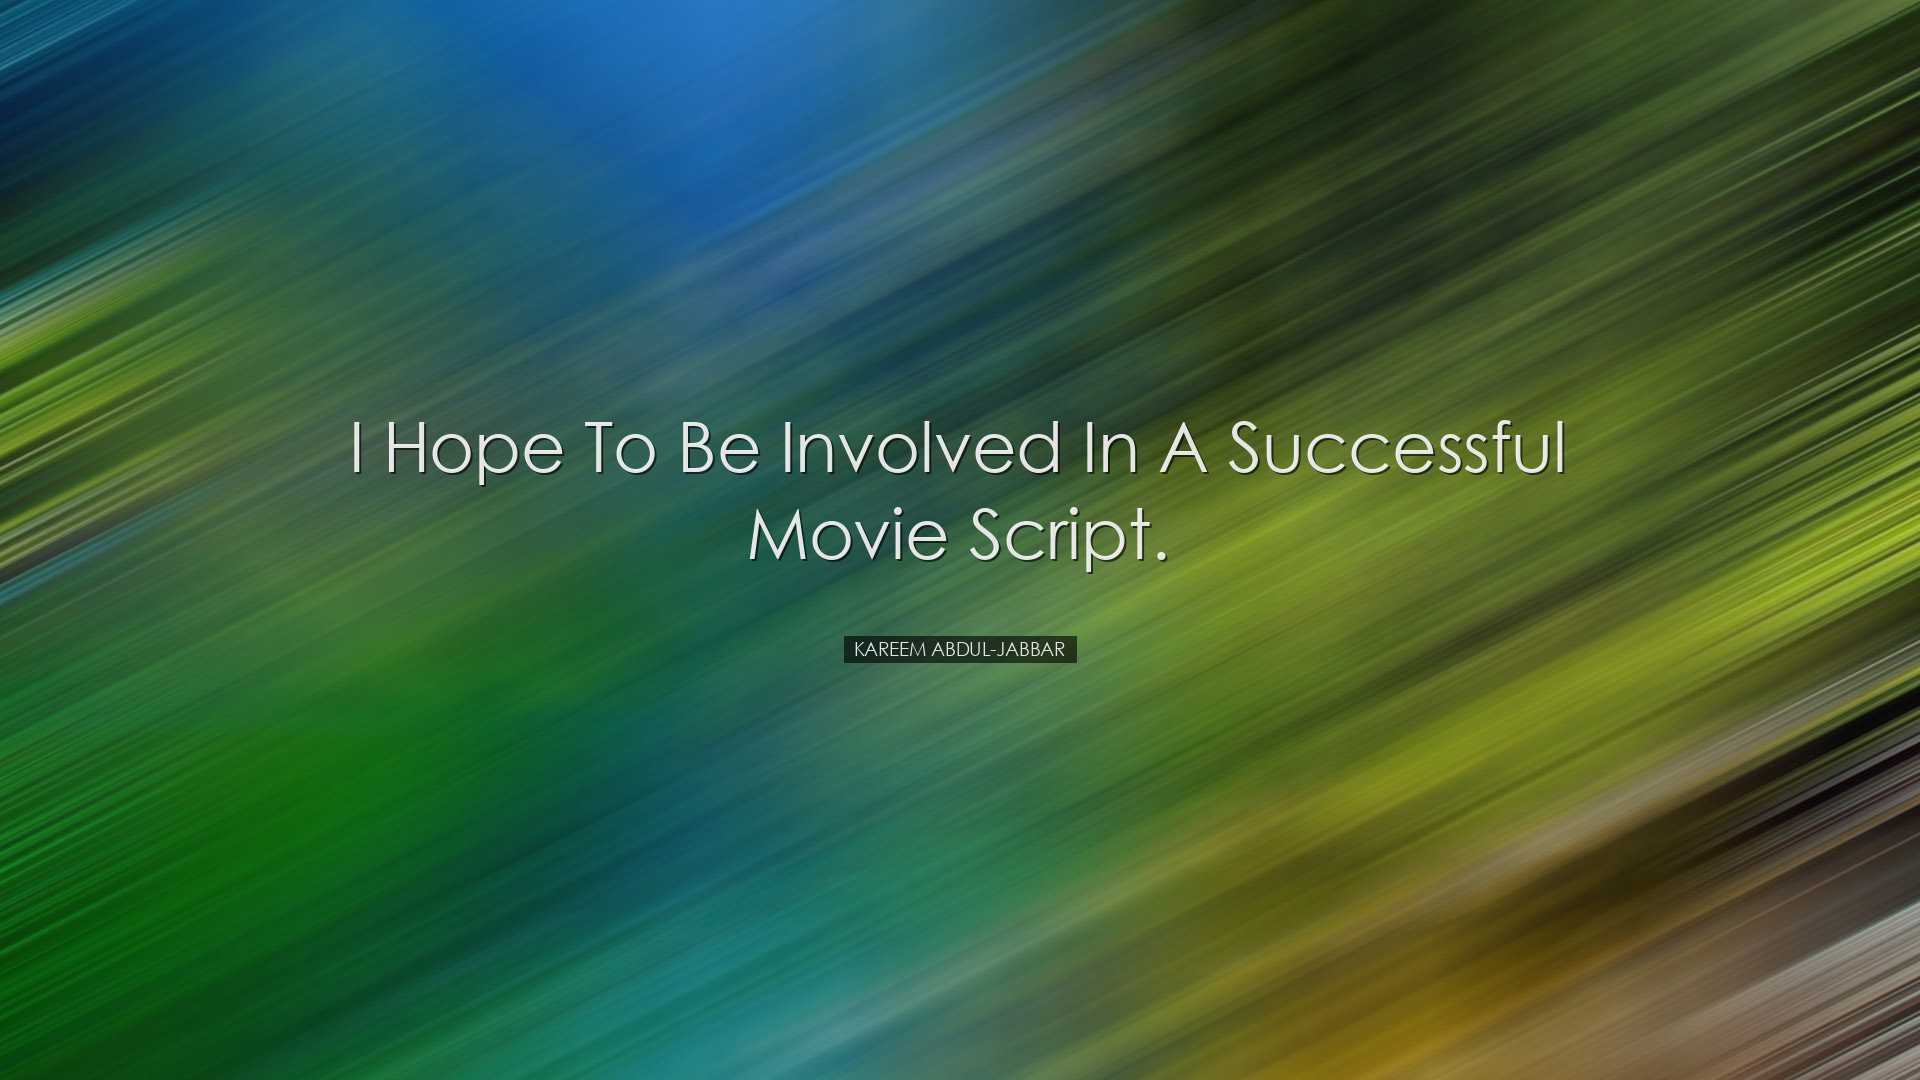 I hope to be involved in a successful movie script. - Kareem Abdul